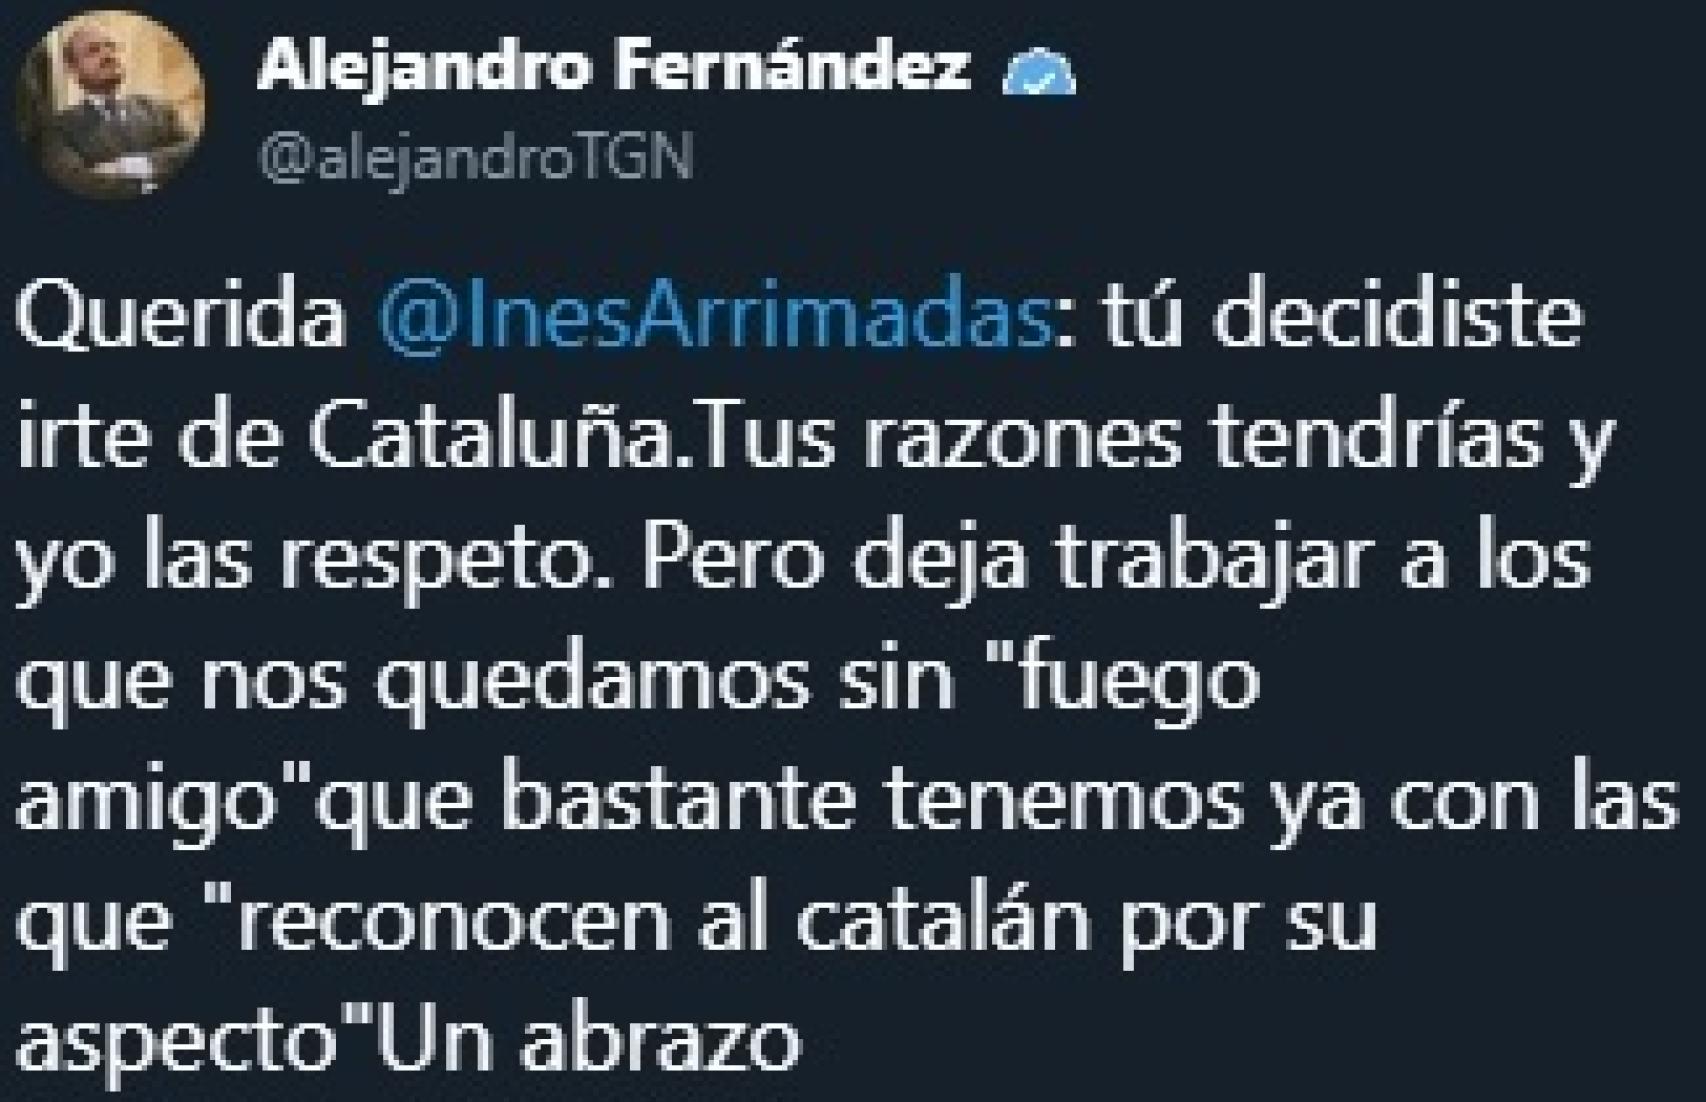 Mensaje del líder del PP catalán, Alejandro Fernández, en Twitter.